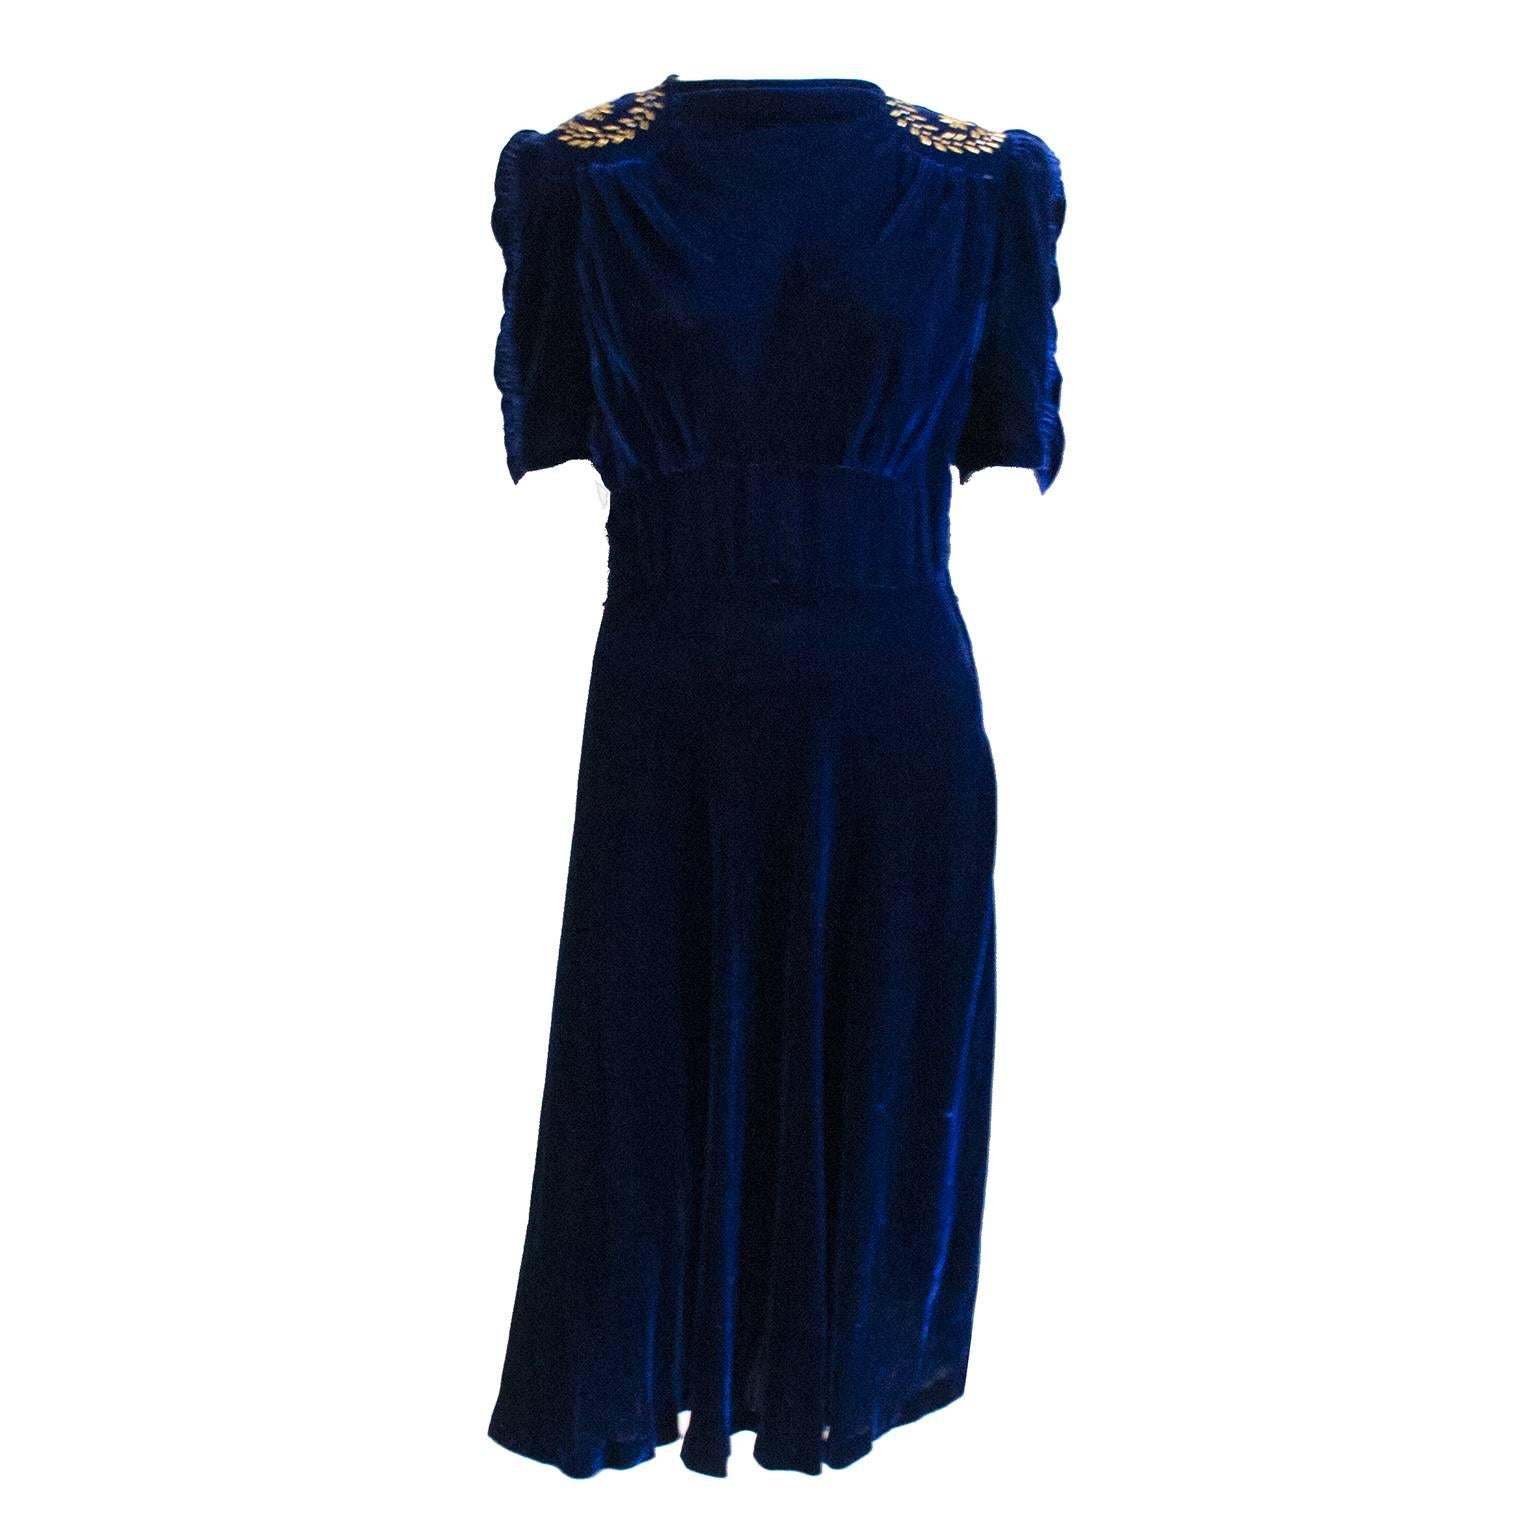 1930s blue dress